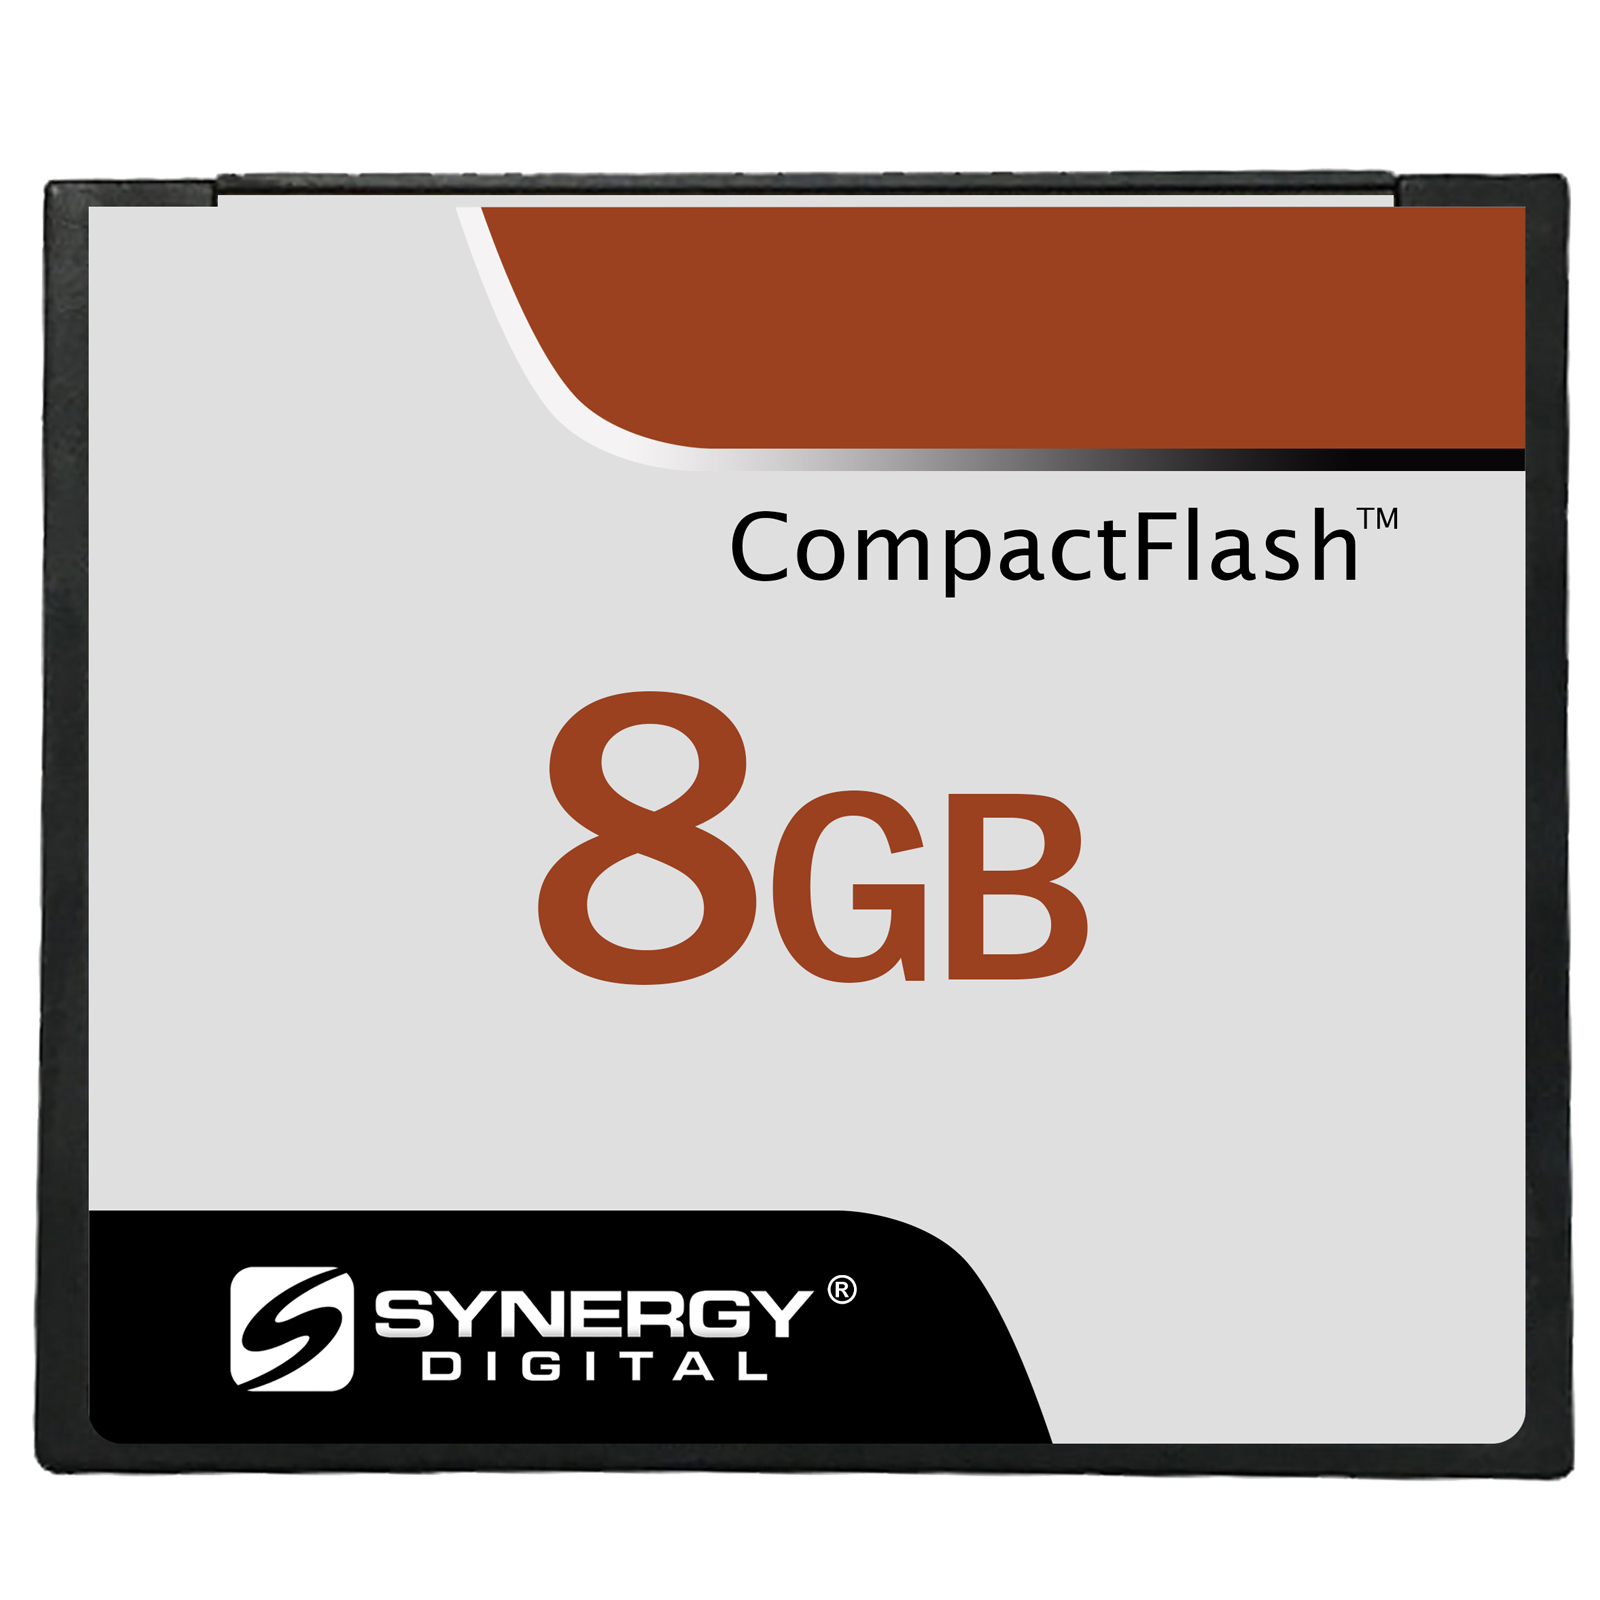 8GB CompactFlash® Memory Card